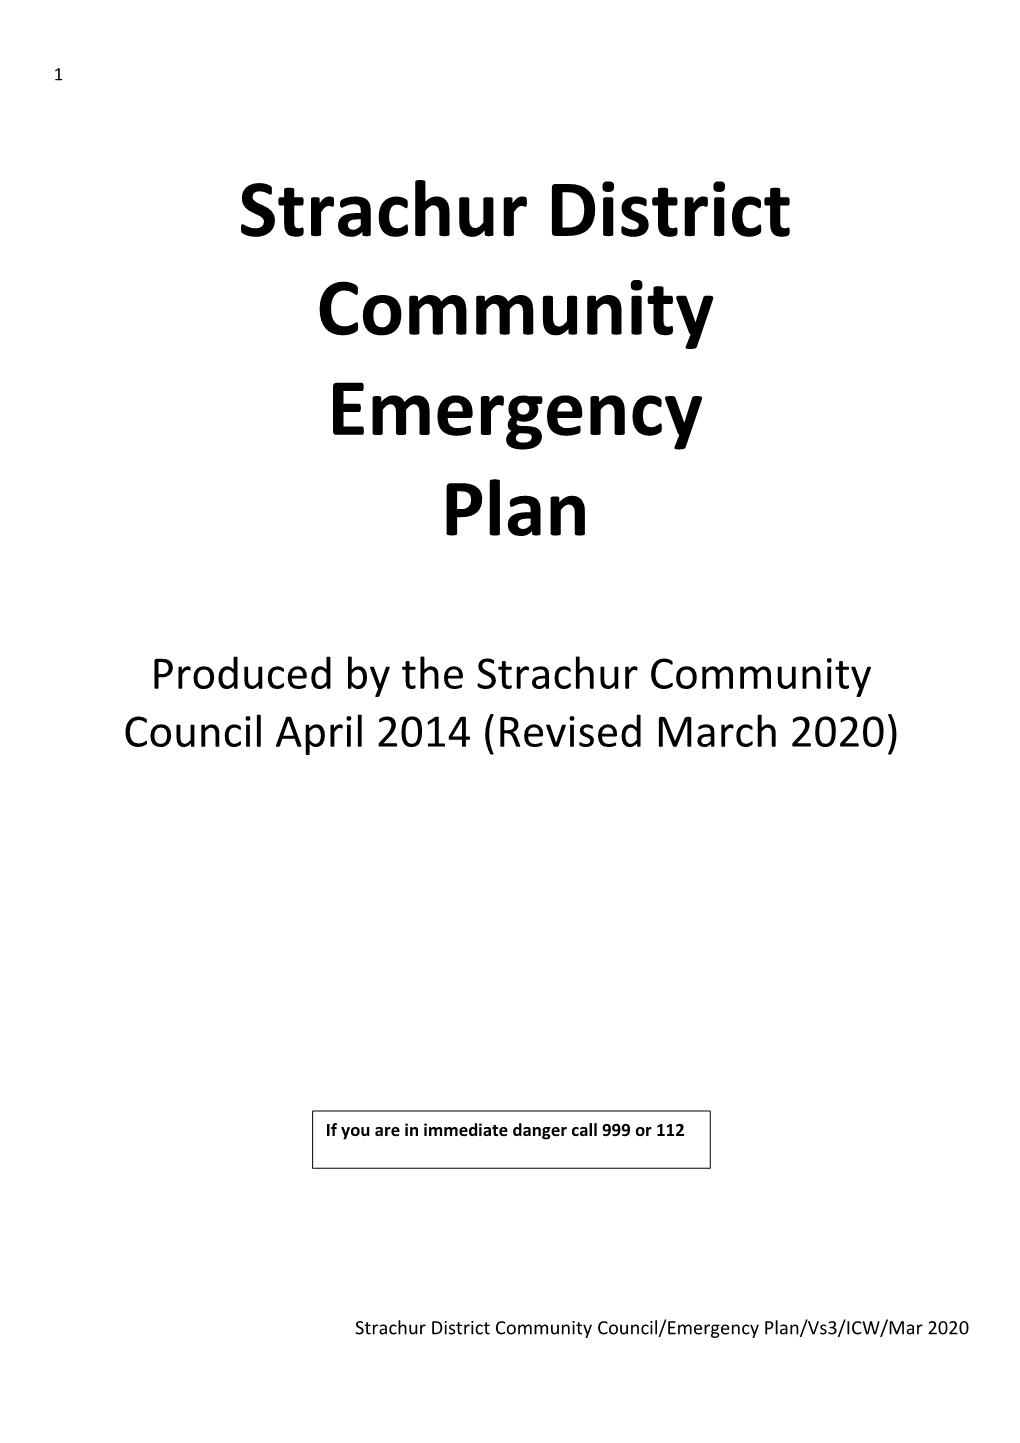 Strachur District Community Emergency Plan